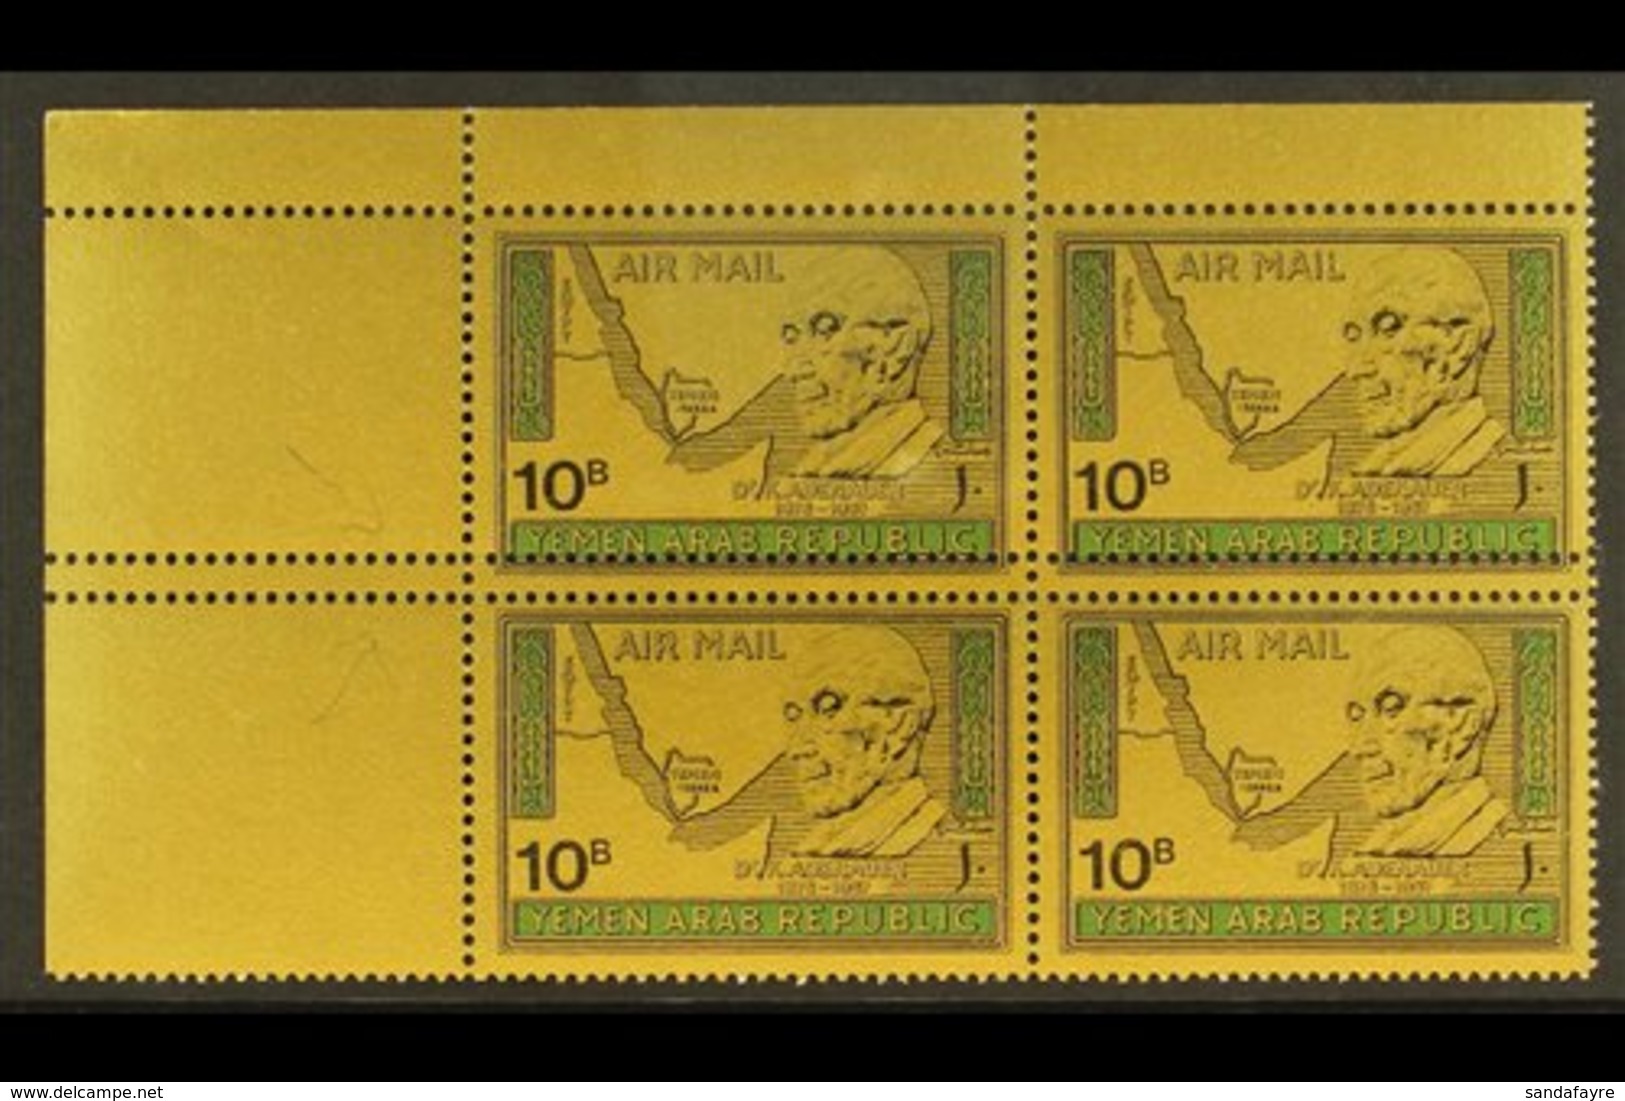 \Y YEMEN ARAB REPUBLIC\Y 1968 Air Adenauer Gold Papers Complete Set, Michel 719/21, Very Fine Never Hinged Mint Corner B - Yemen